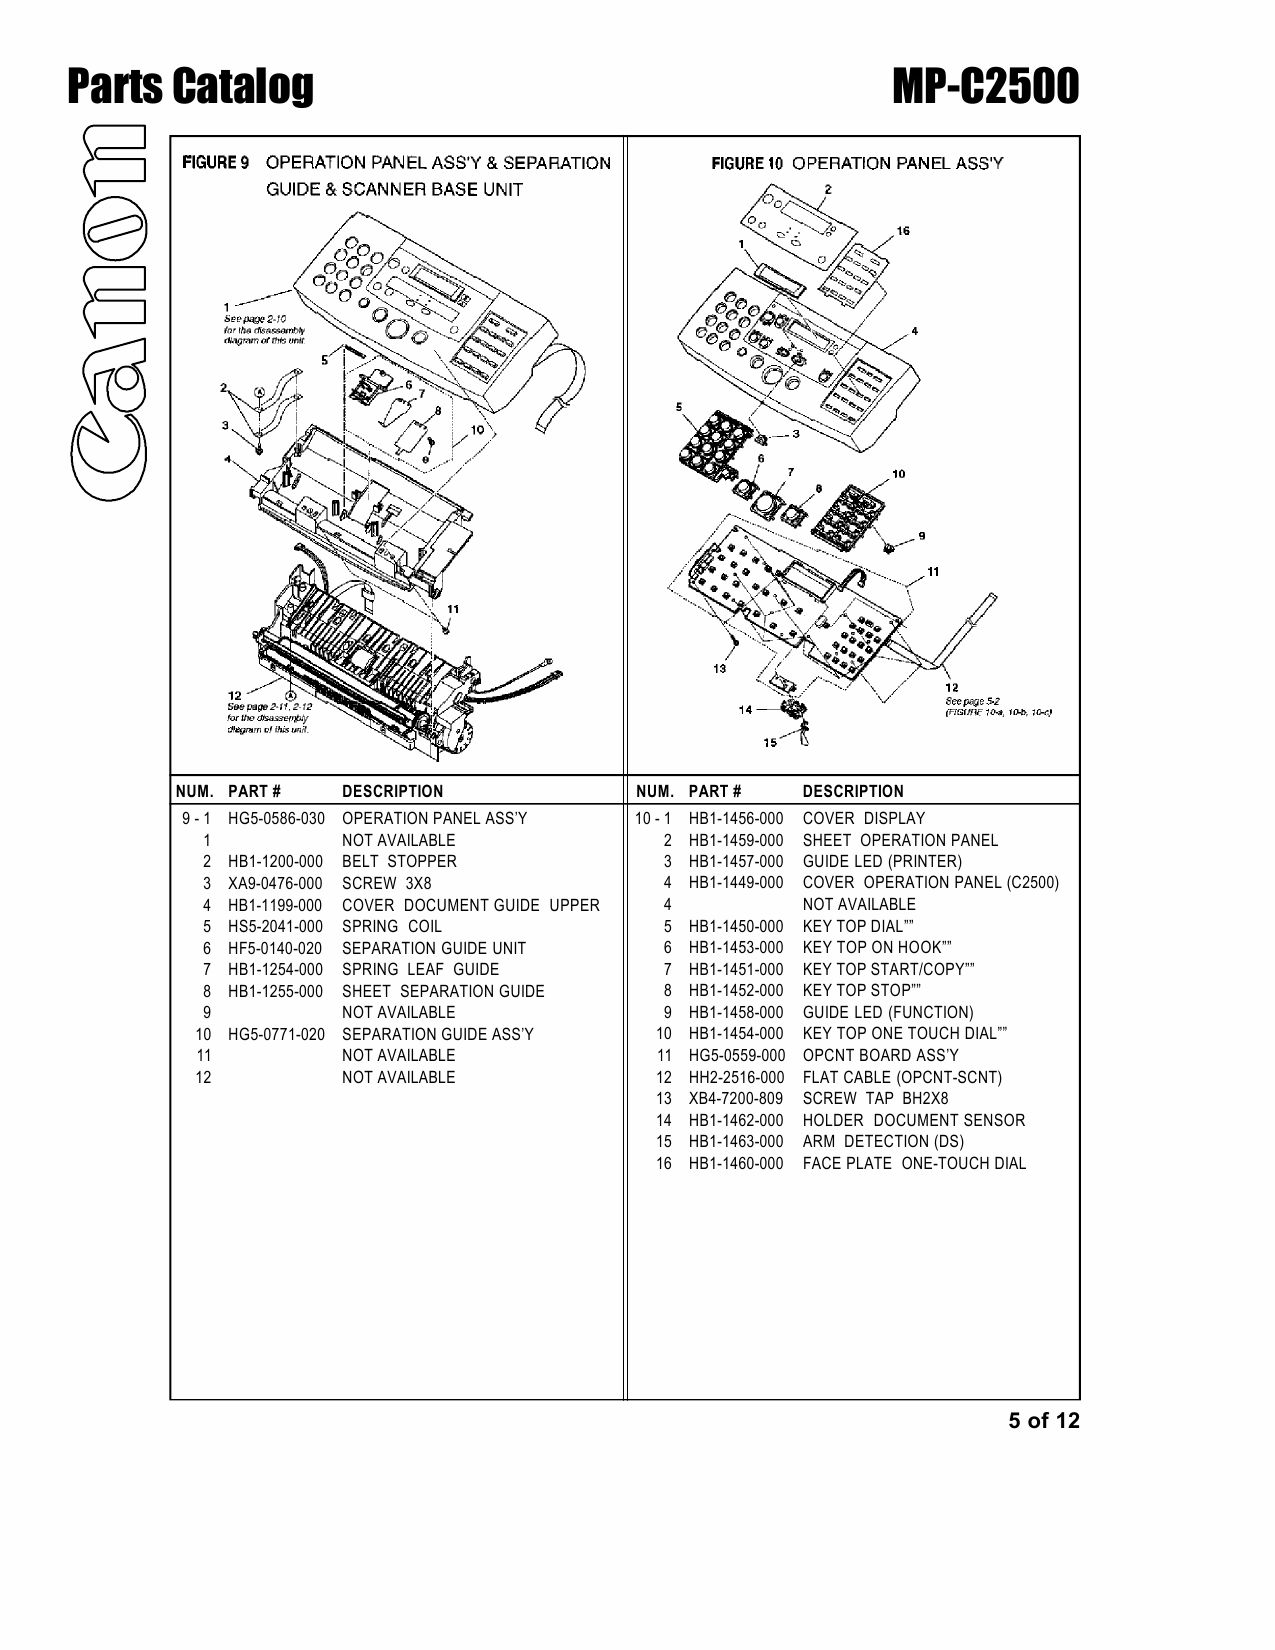 Canon MultiPASS MP-C2500 Parts Catalog Manual-5